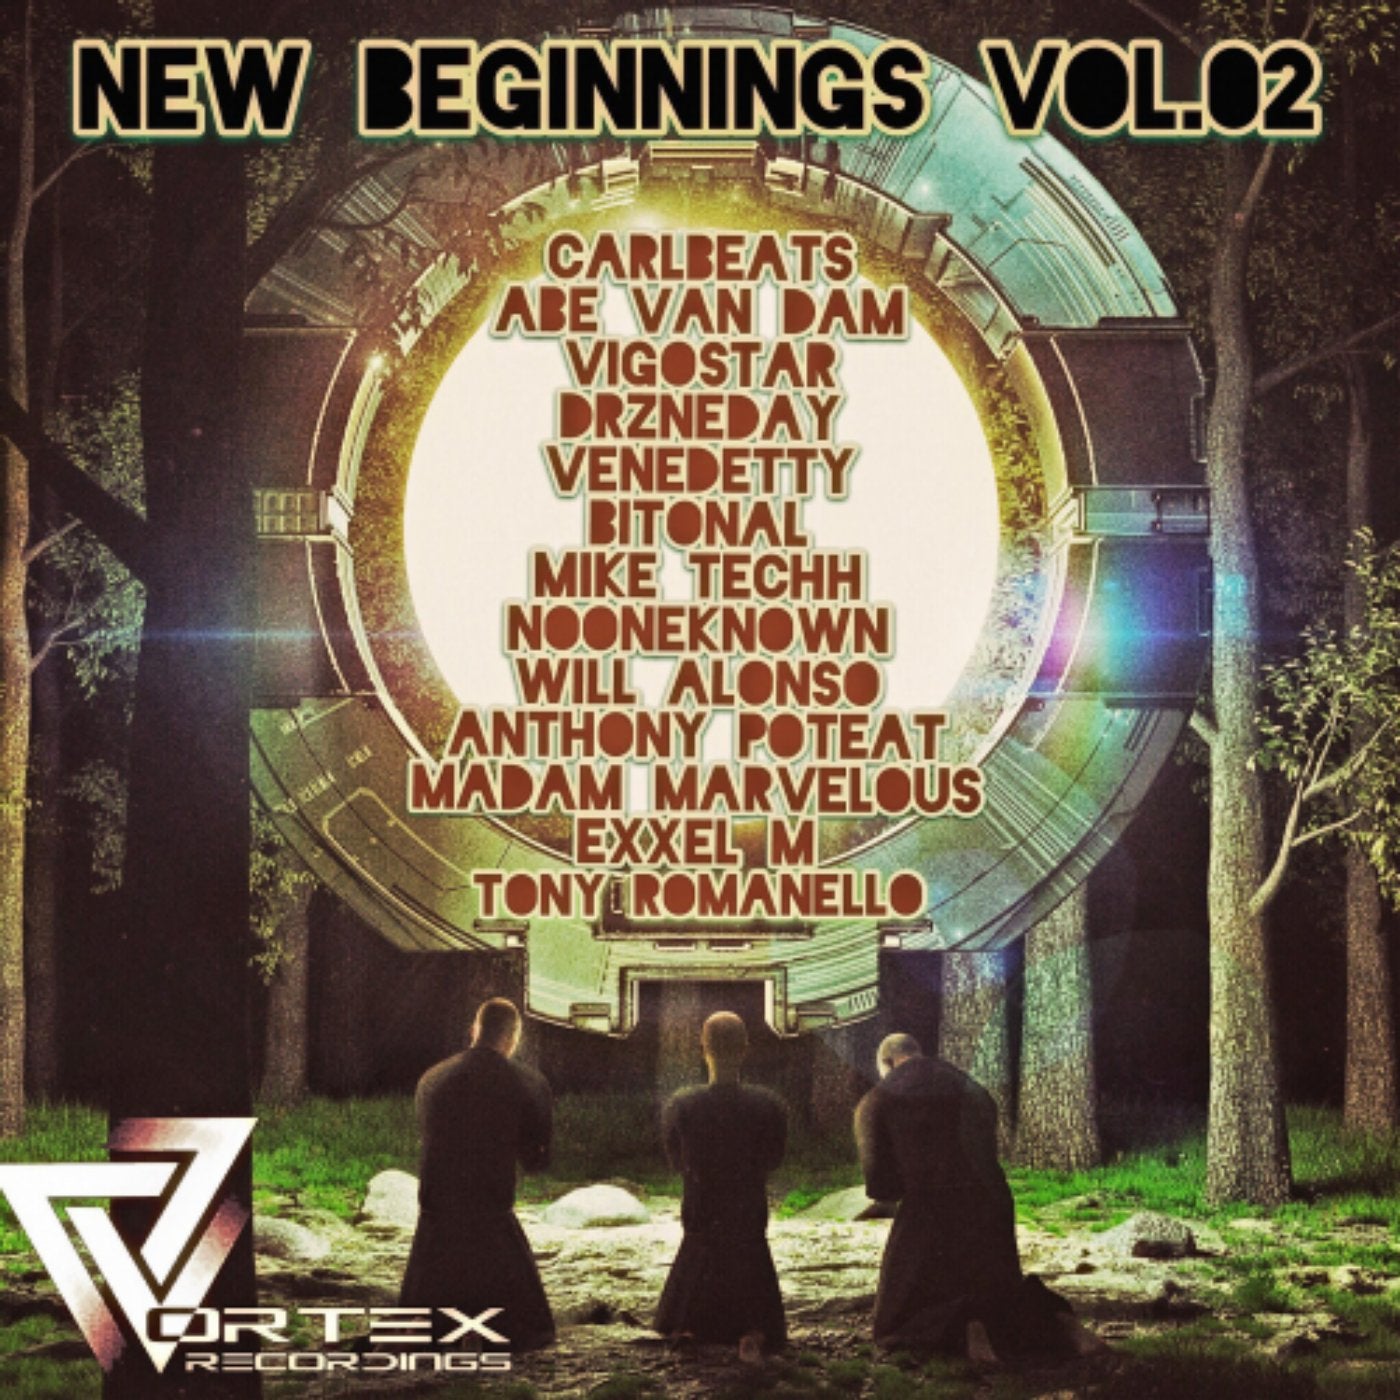 The New Beginnings Vol 2